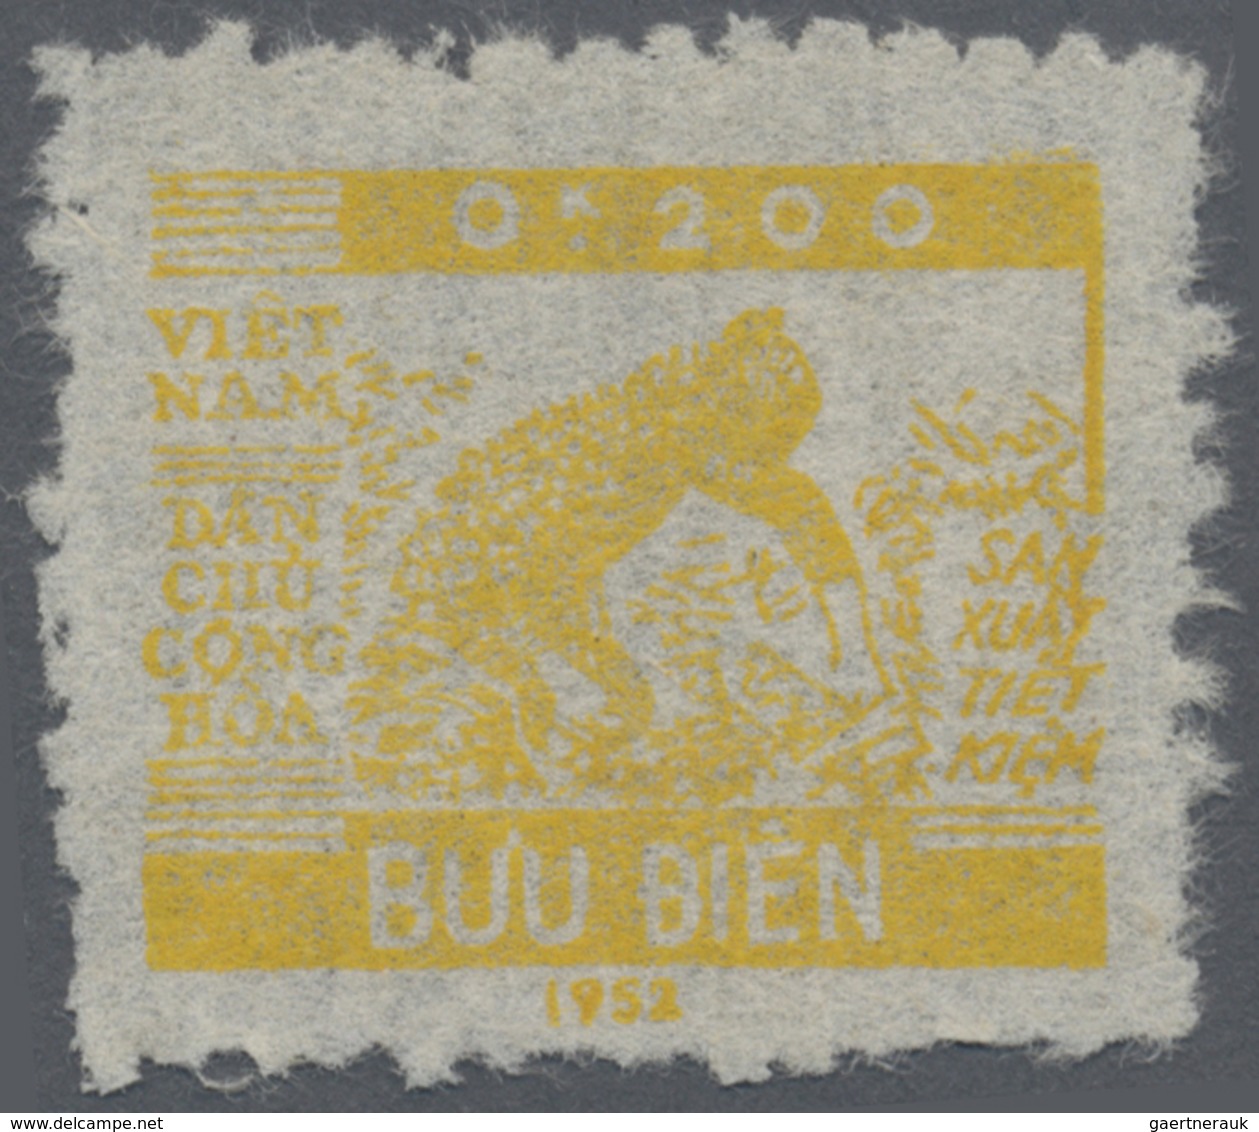 (*) Vietnam-Nord - Dienstmarken: 1952, Rice Growers 0,200 Yellow, Unused Without Gum, Very Rare Stamp - Viêt-Nam